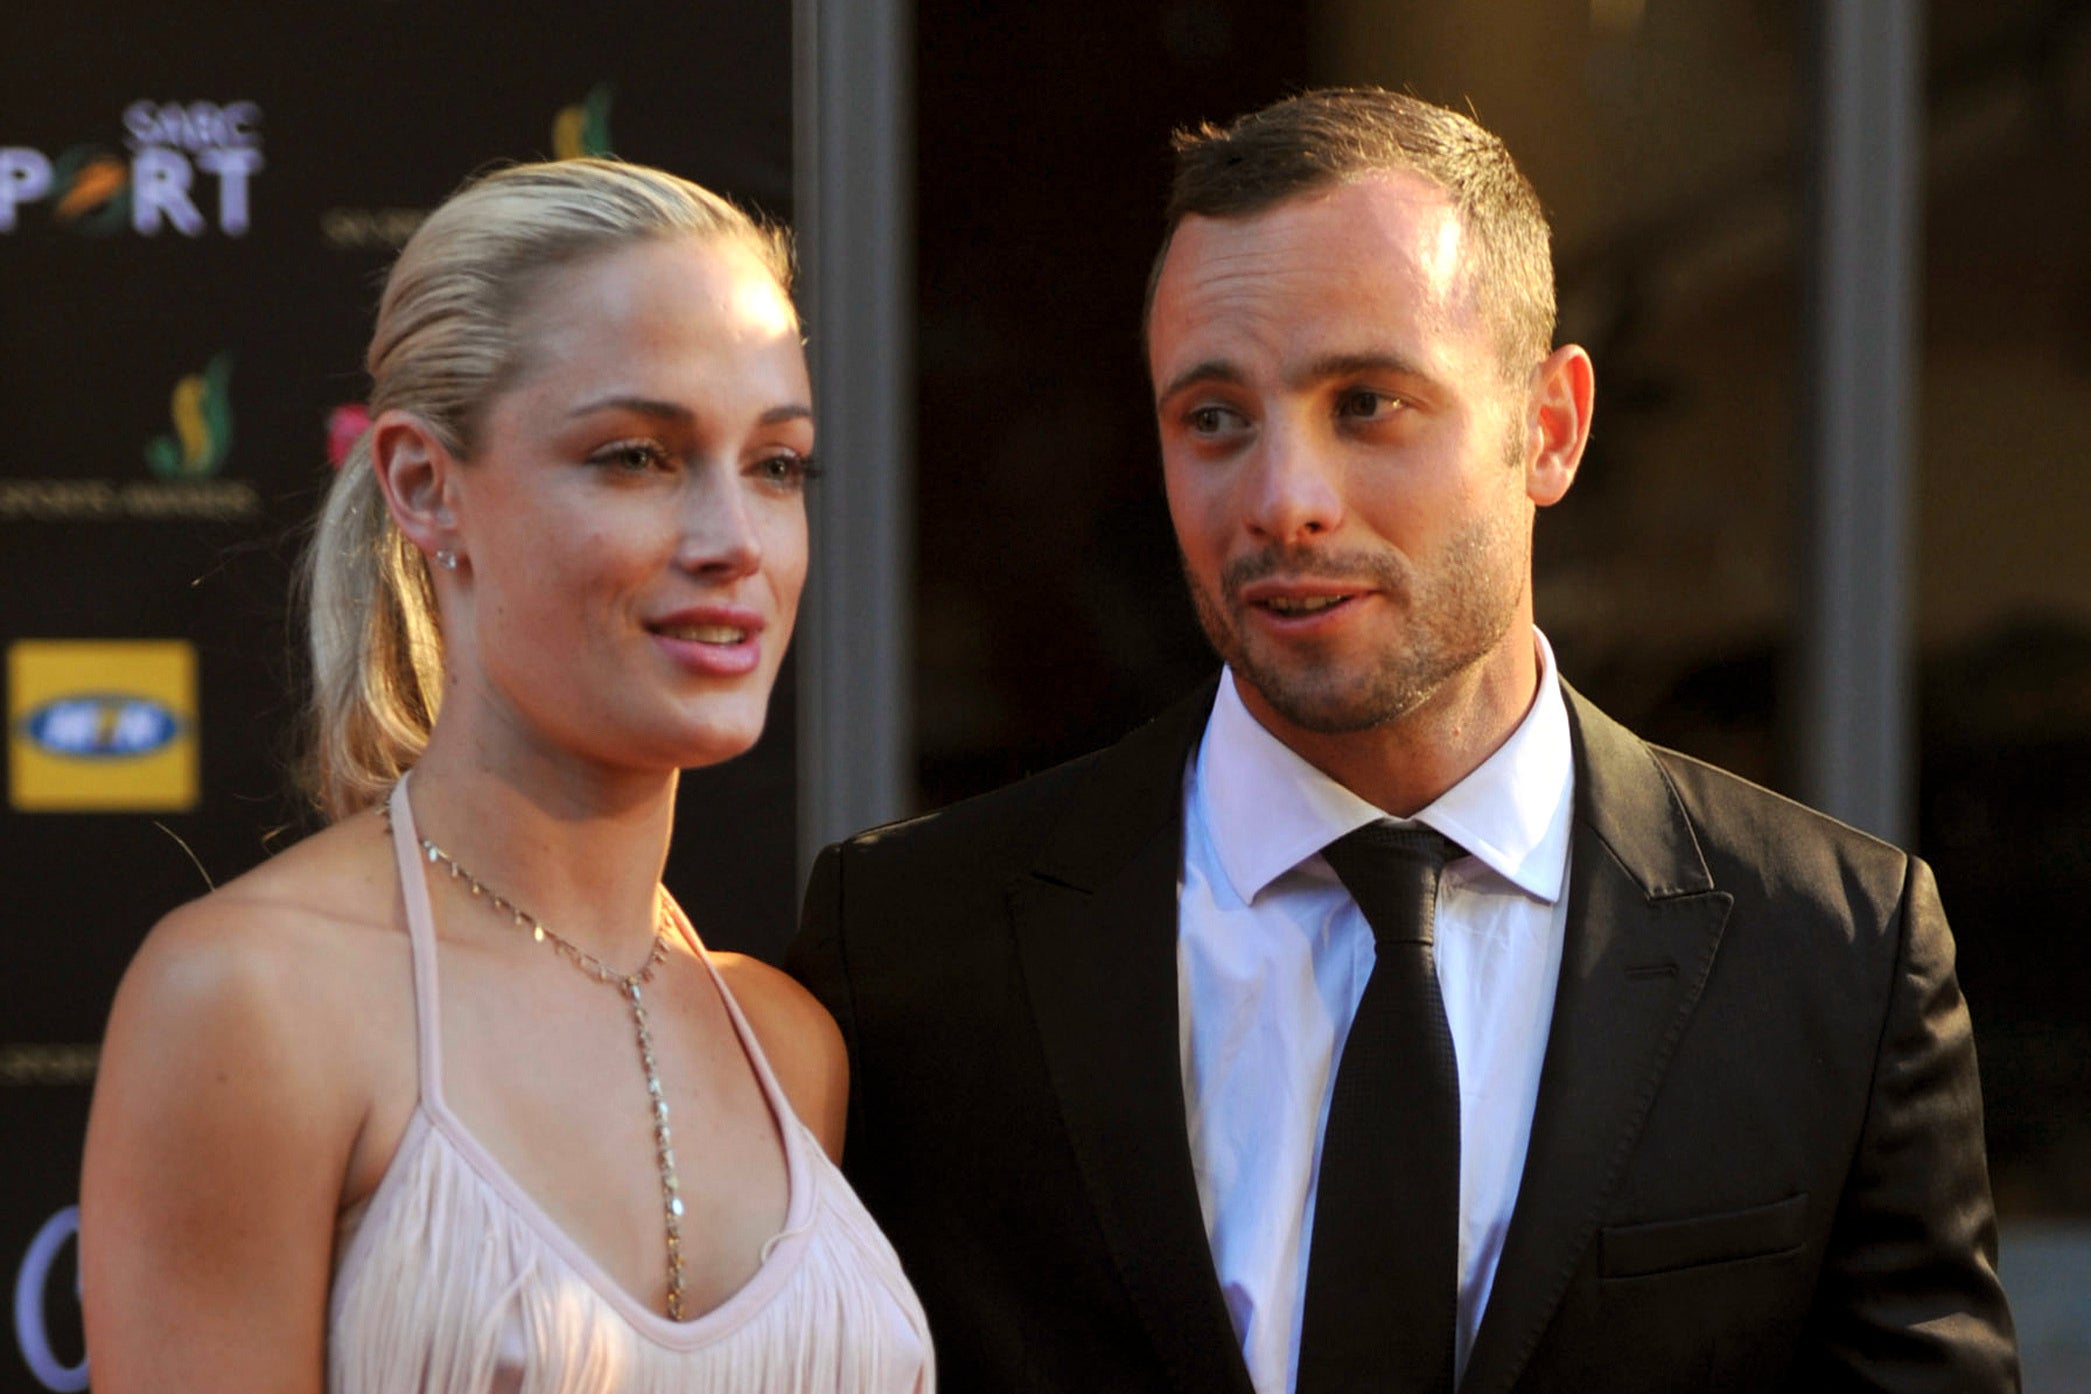 Pistorius, right, will walk free from prison 11 years after he murdered his girlfriend Reeva Steenkamp